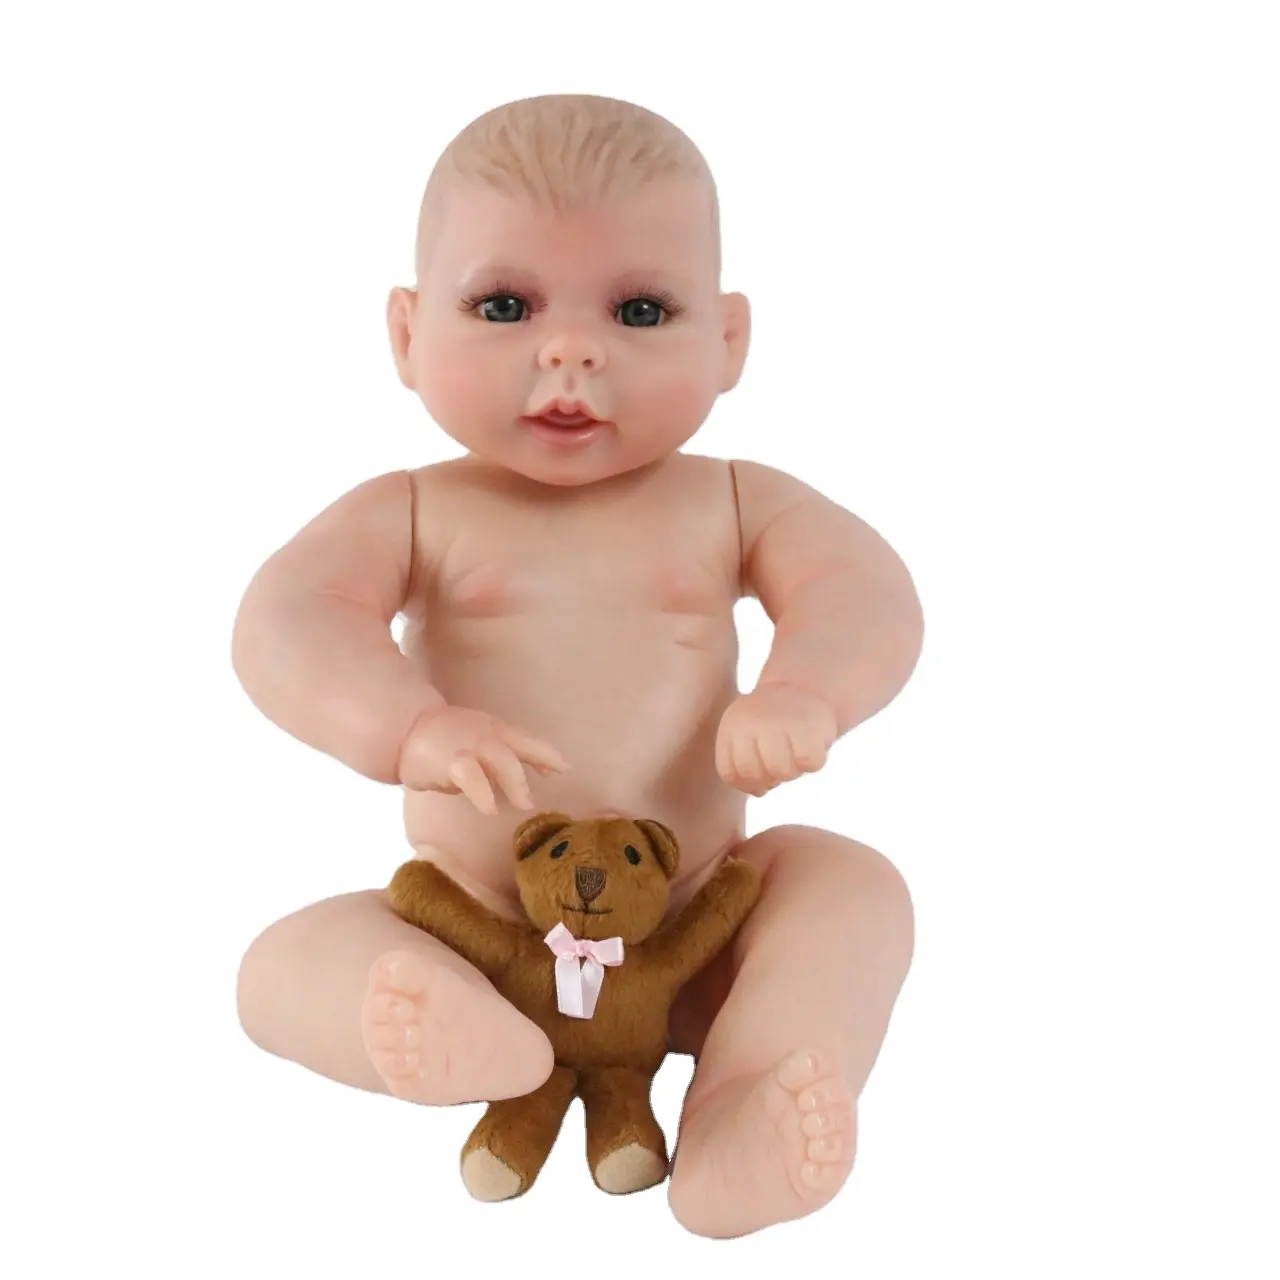 Hot sale New Design Cheap Alive Lifelike Full Body Silicone Doll Vinyl Newborn Reborn Baby Doll for Kids Mini Cute Soft